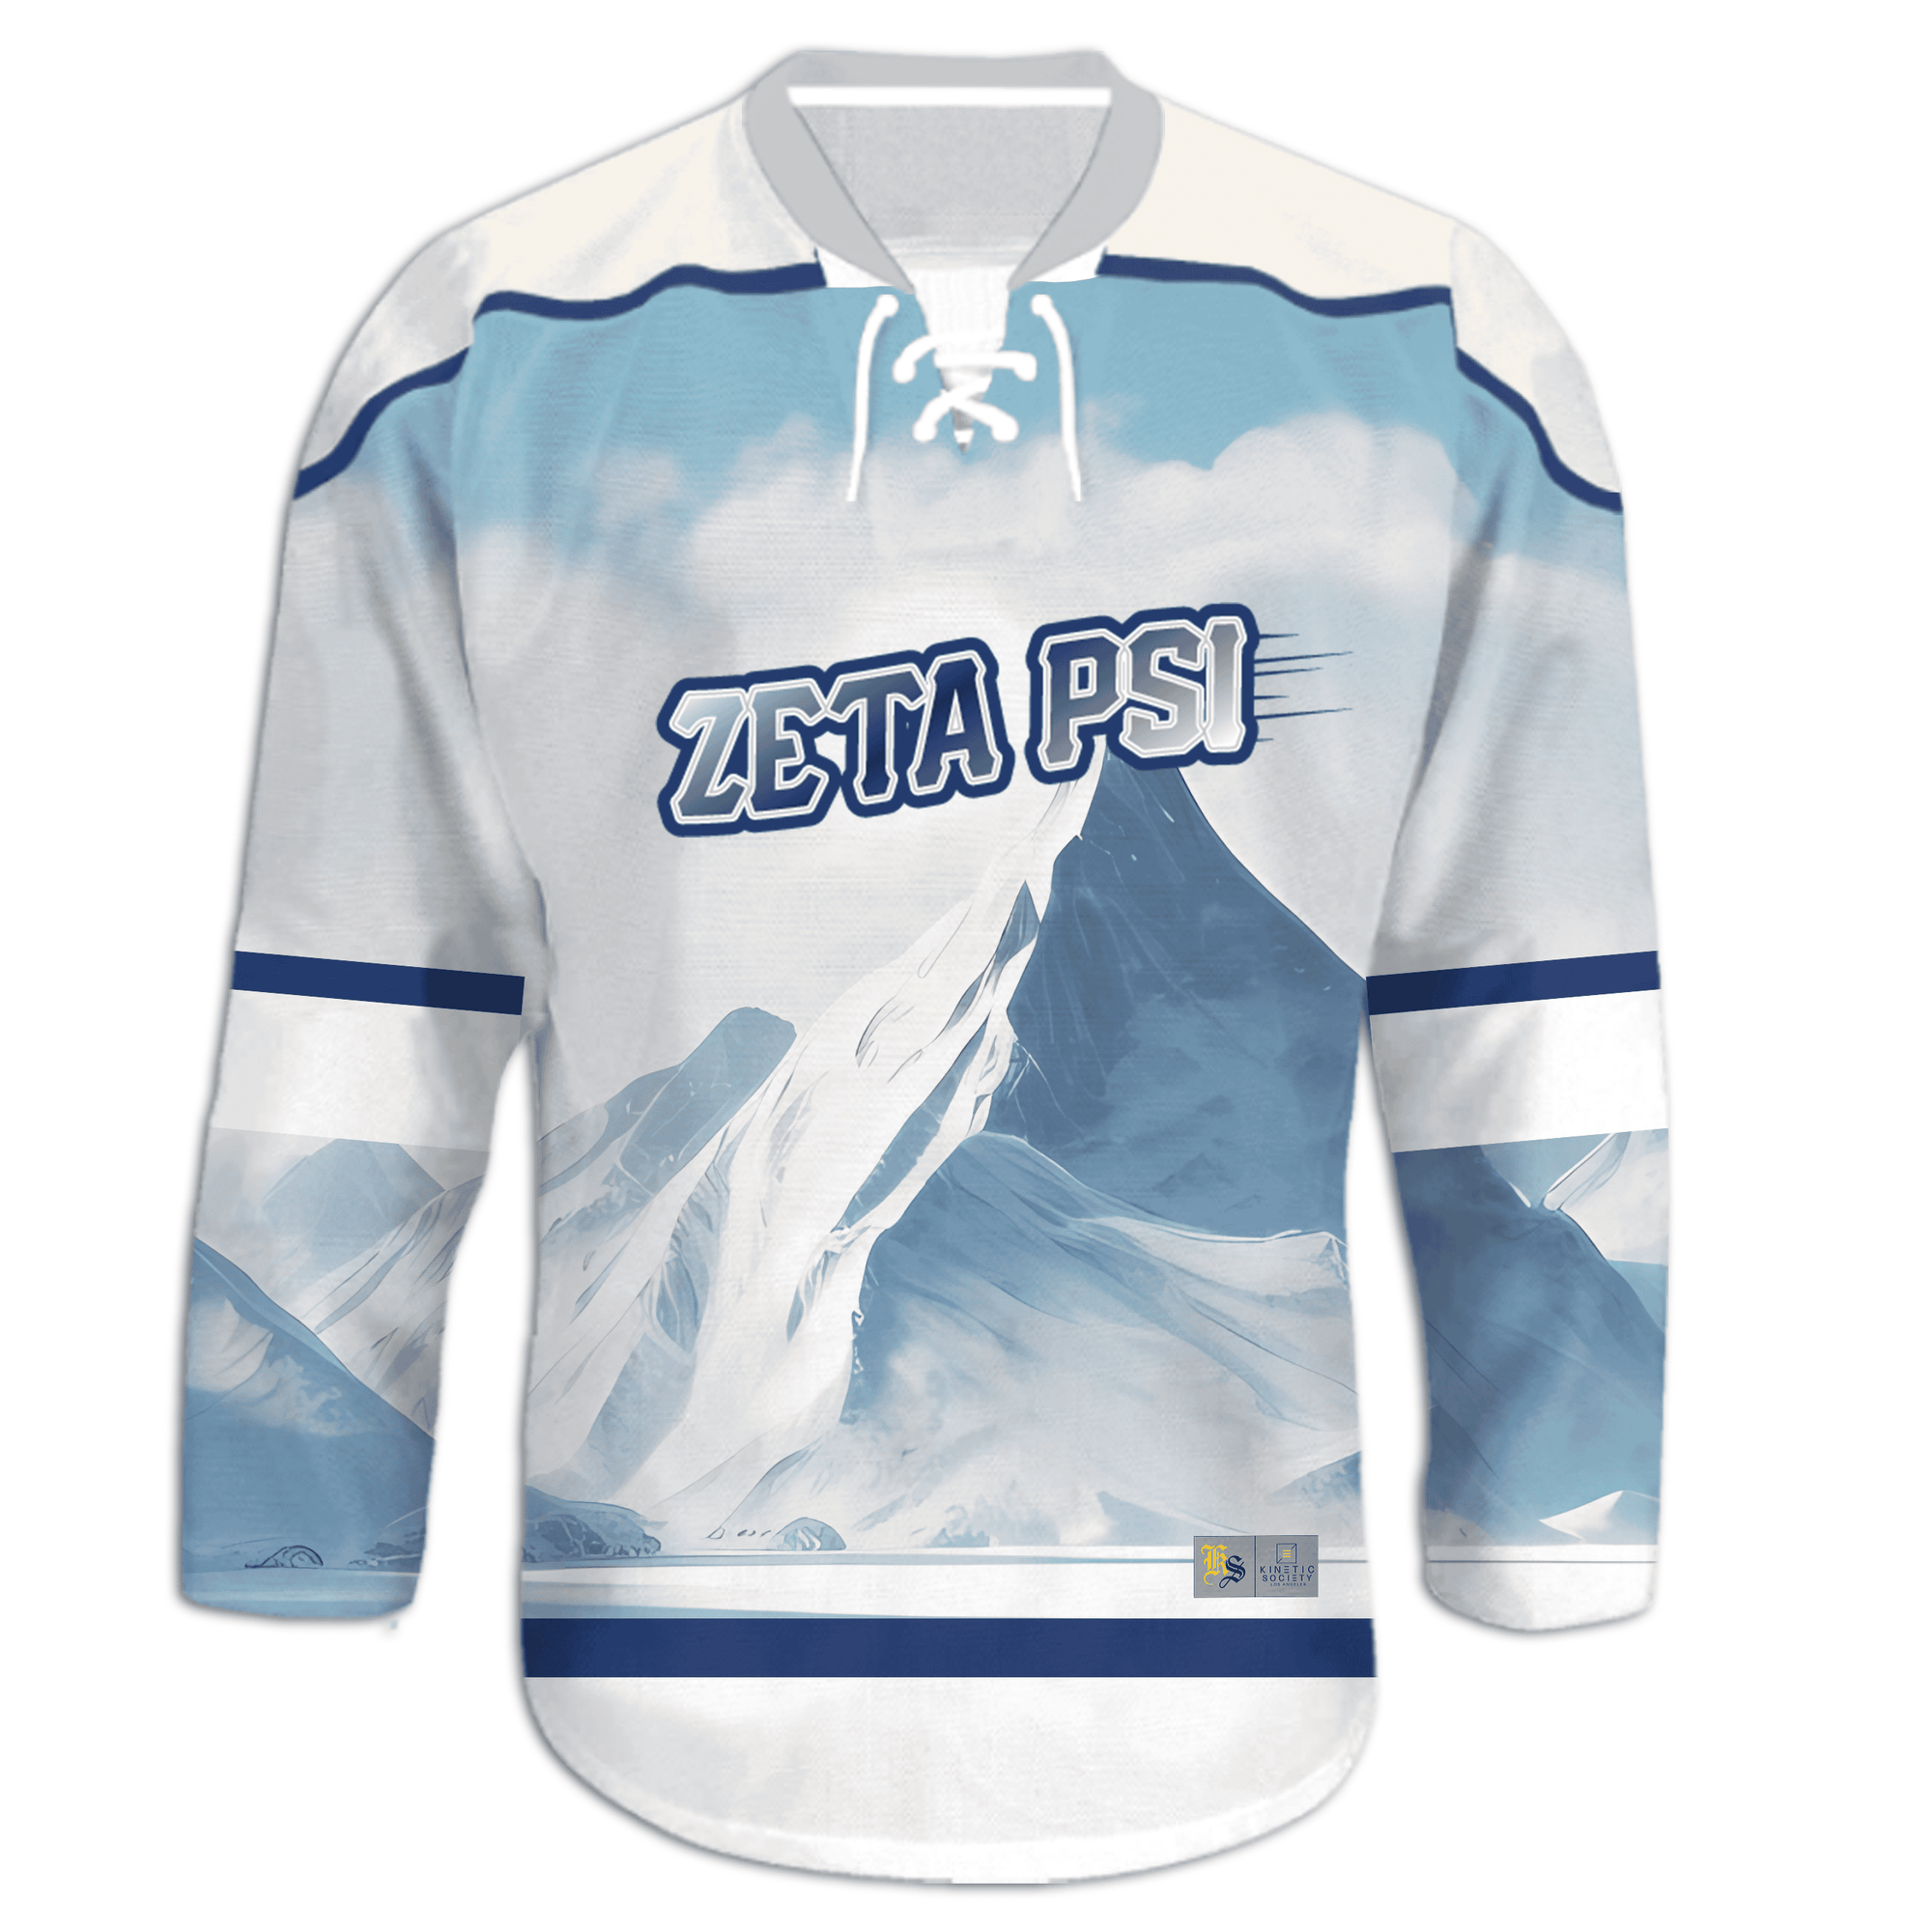 Zeta Psi - Avalance Hockey Jersey